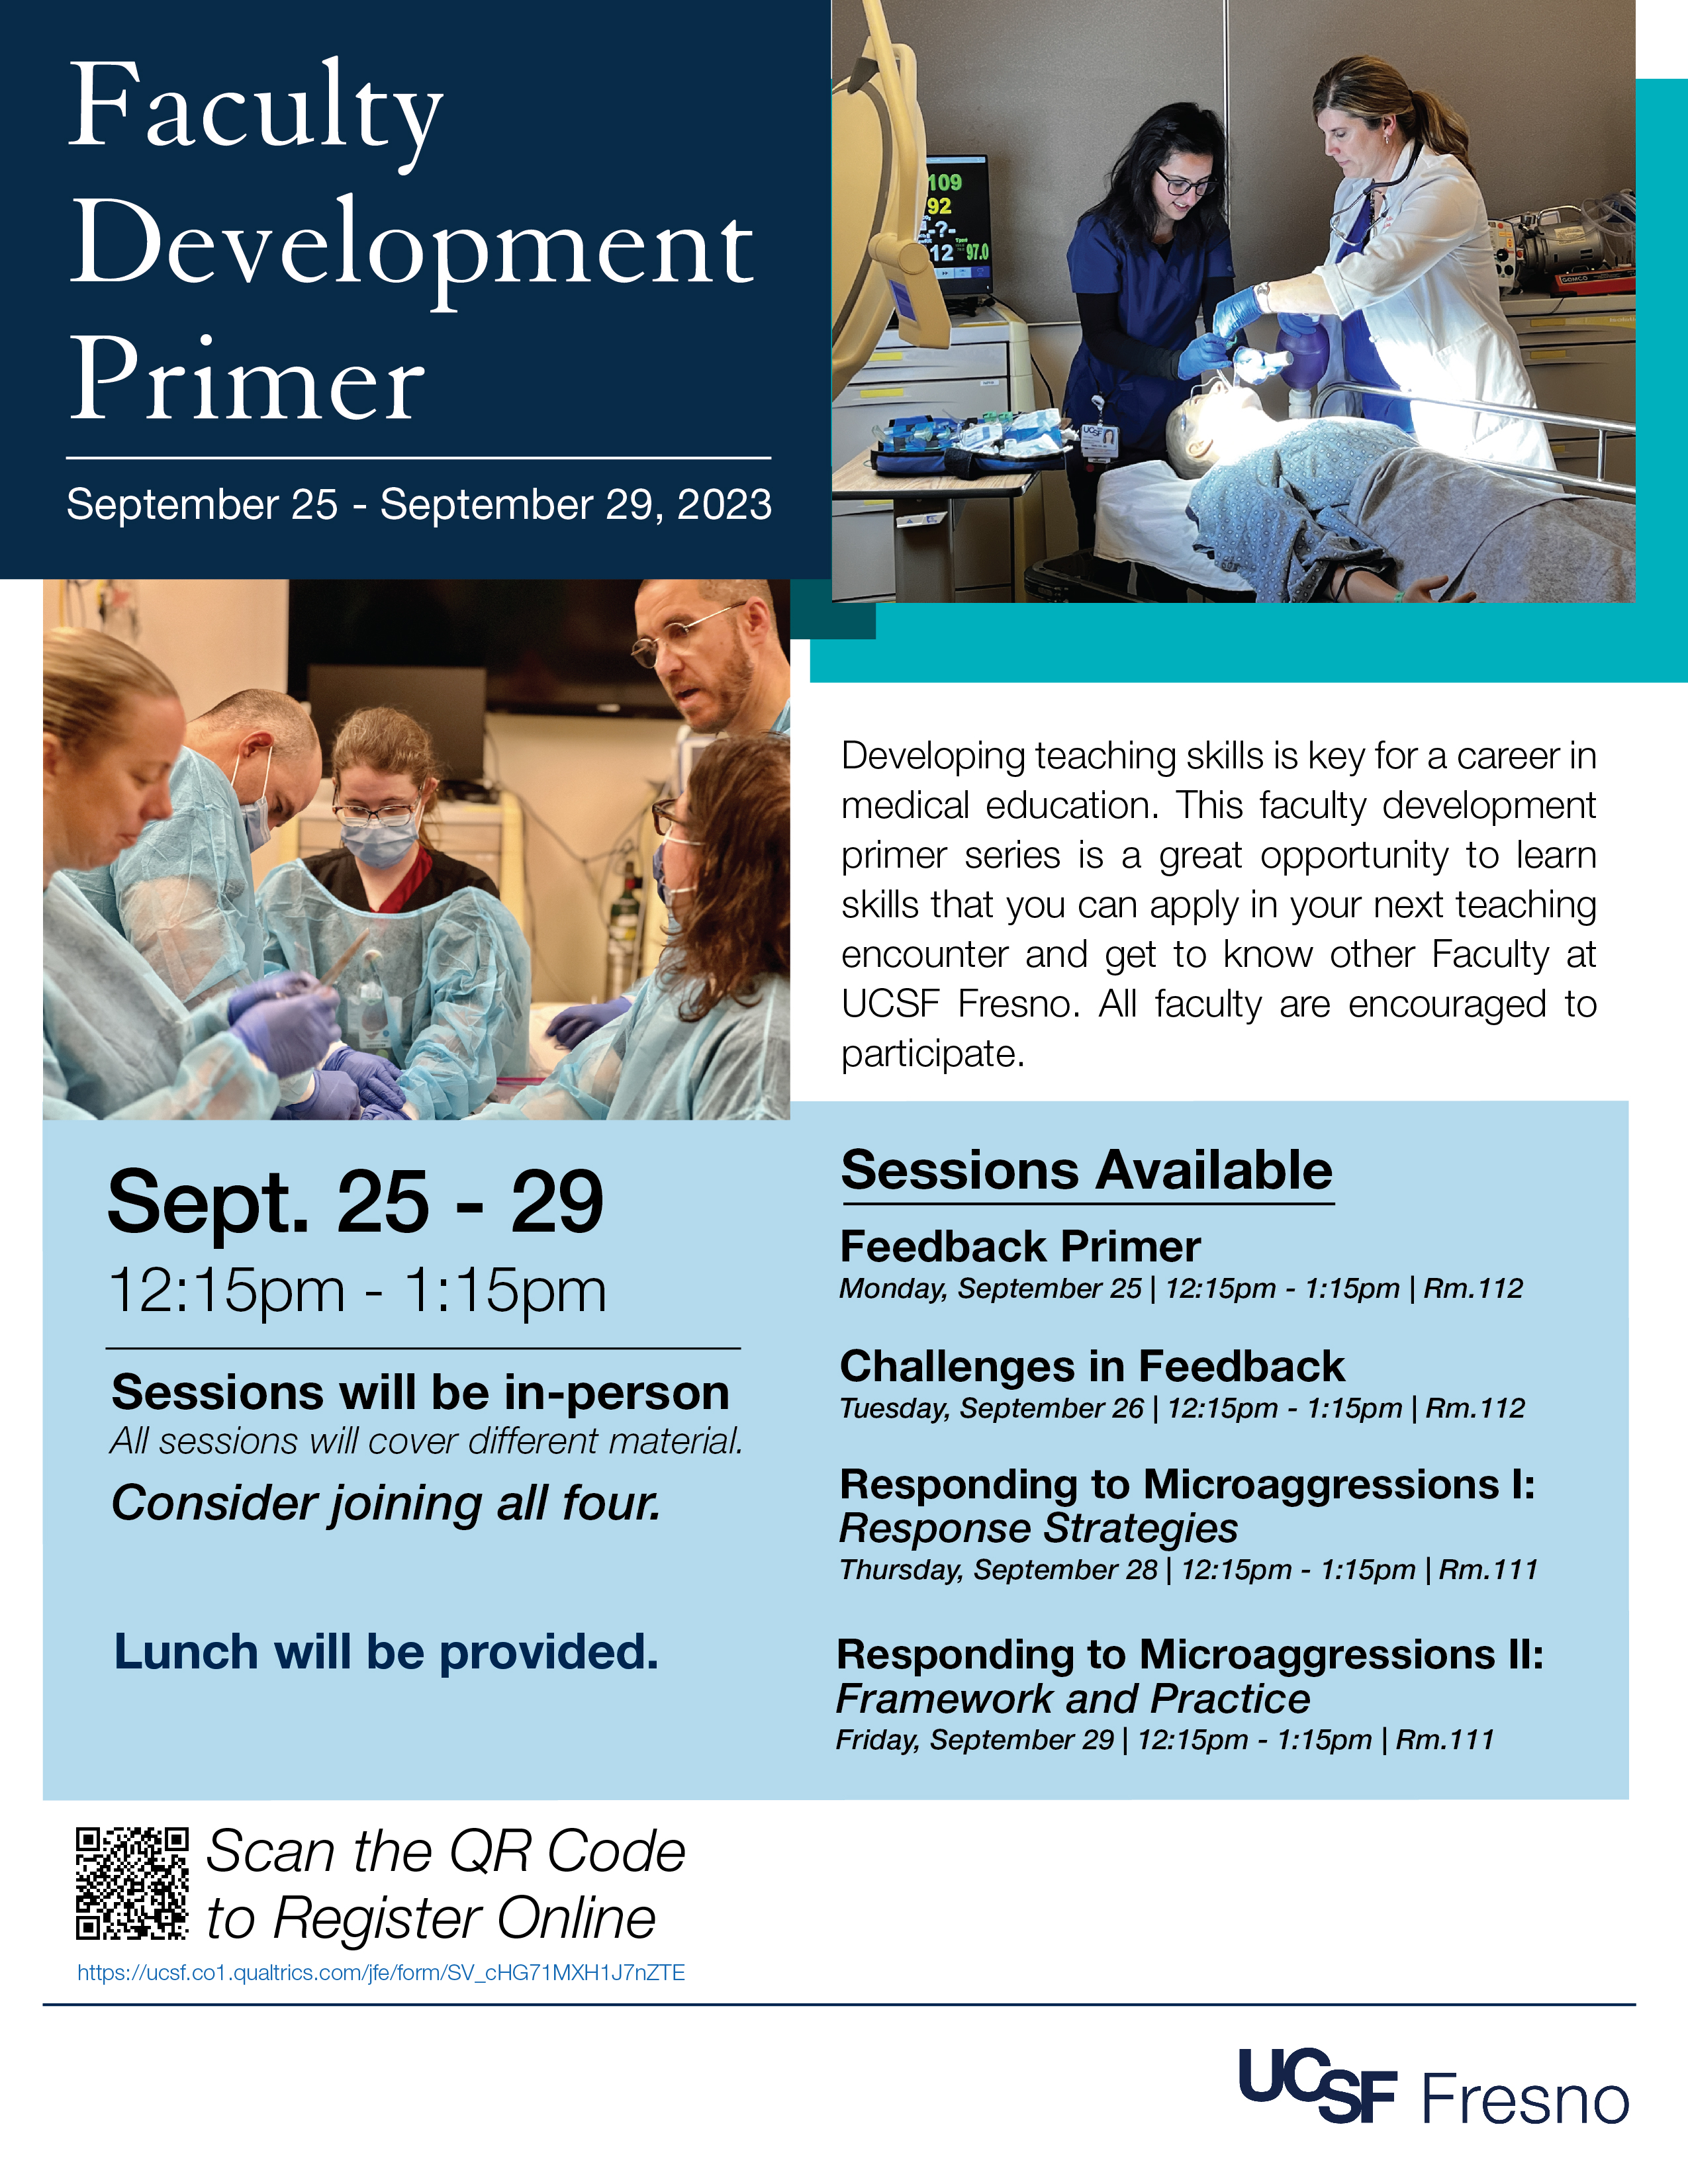 Faculty Development Primer Event Flyer